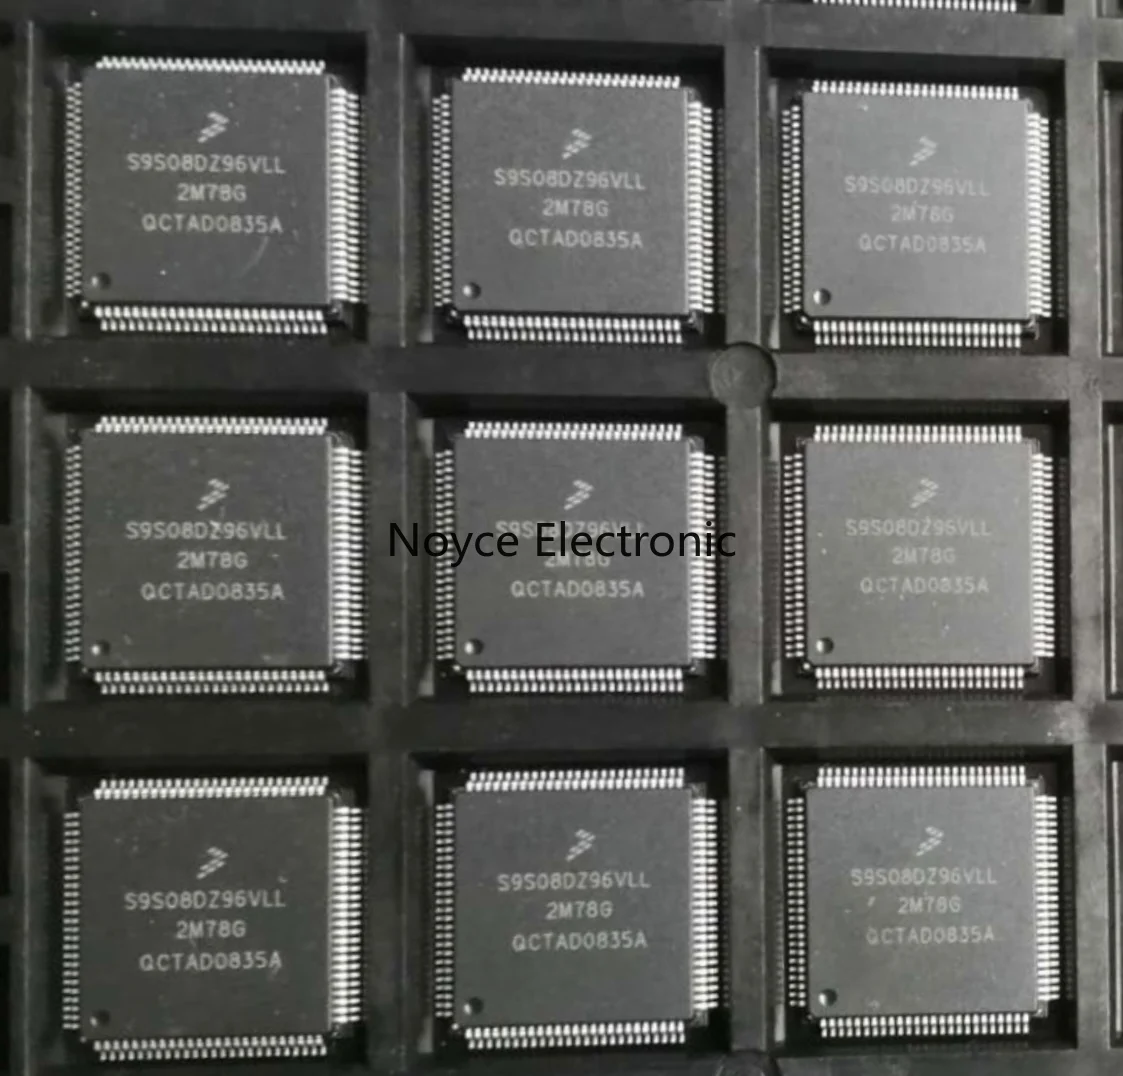 1pcs lot ad9957bsvz ad9957 tqfp100 microcontroller chips in stock 1pcs/S9S08DZ96 new original genuine spot S9S08DZ96VLL TQFP100 microcontroller chip